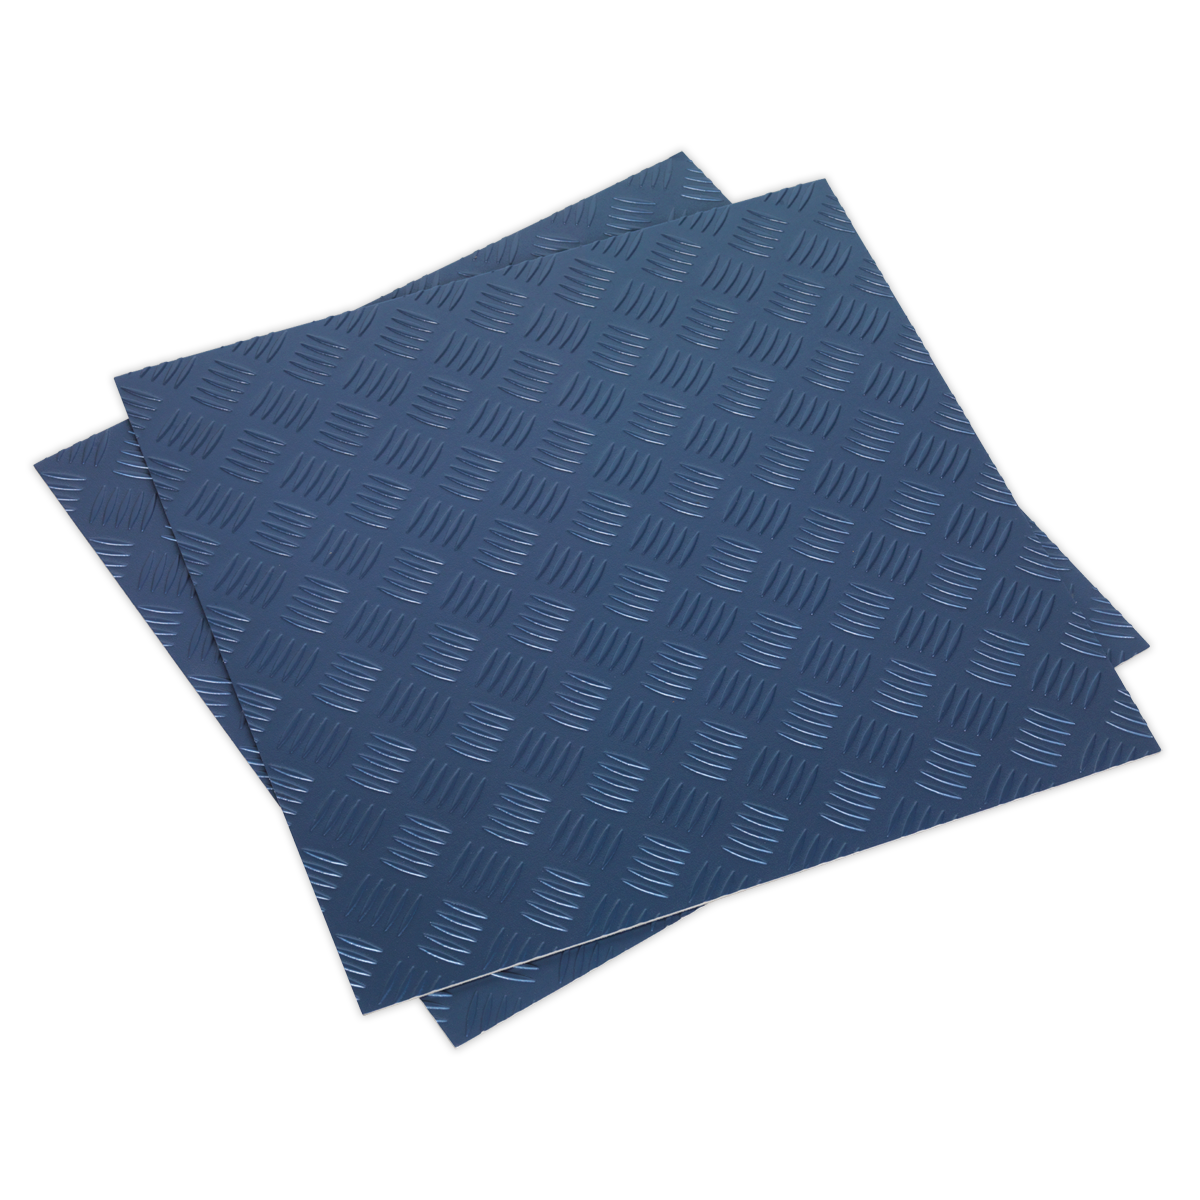 SEALEY - FT1B Vinyl Floor Tile with Peel & Stick Backing - Blue Treadplate Pack of 16